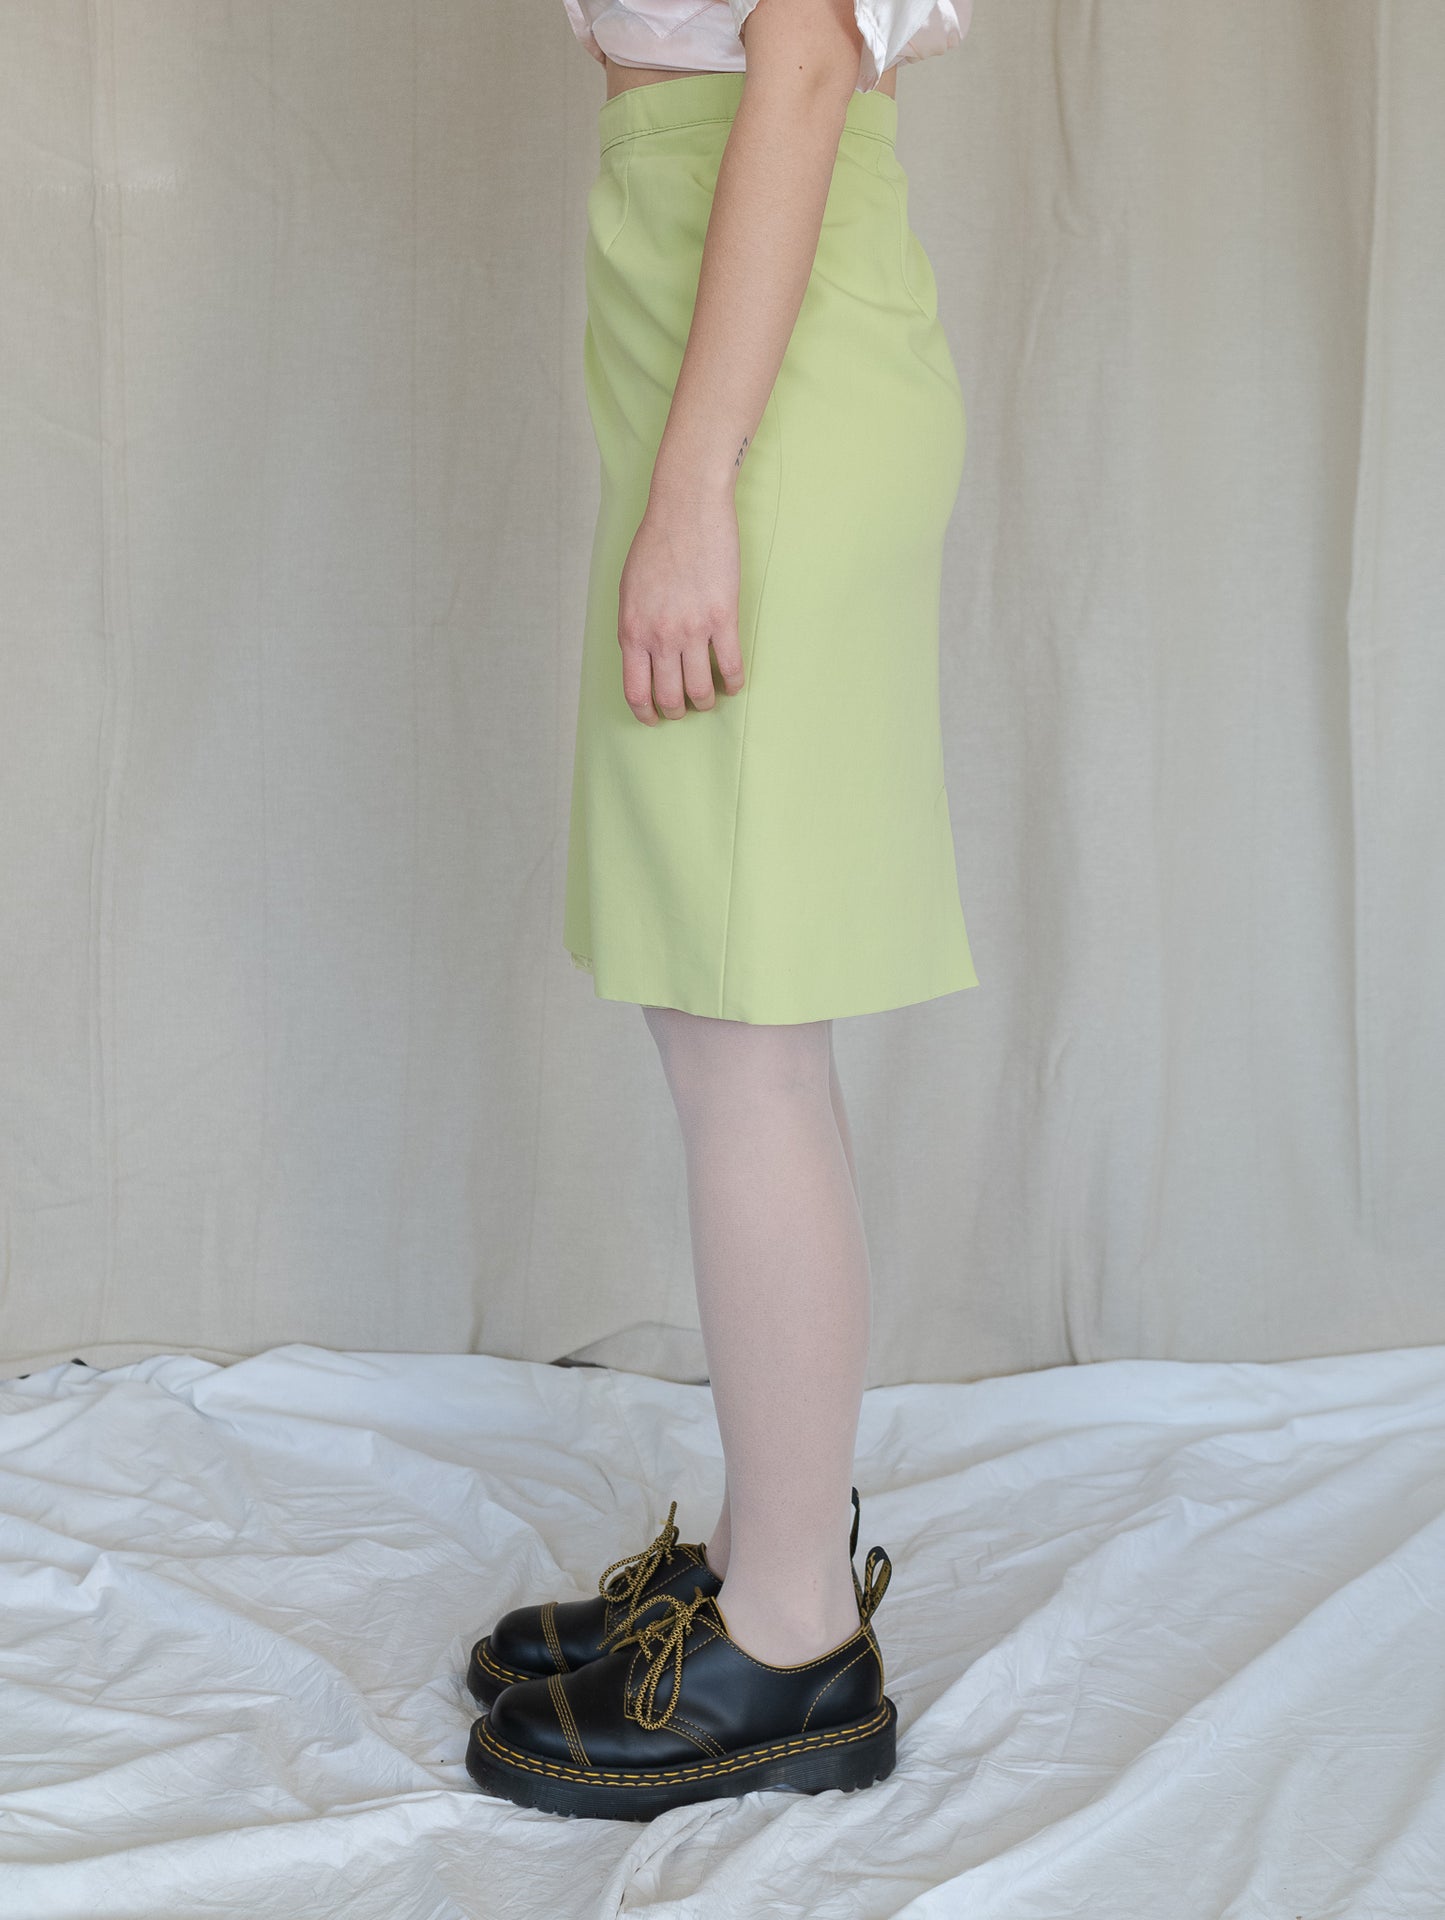 Vintage 90's Lime High Waisted Knee Length Straight Skirt (L)